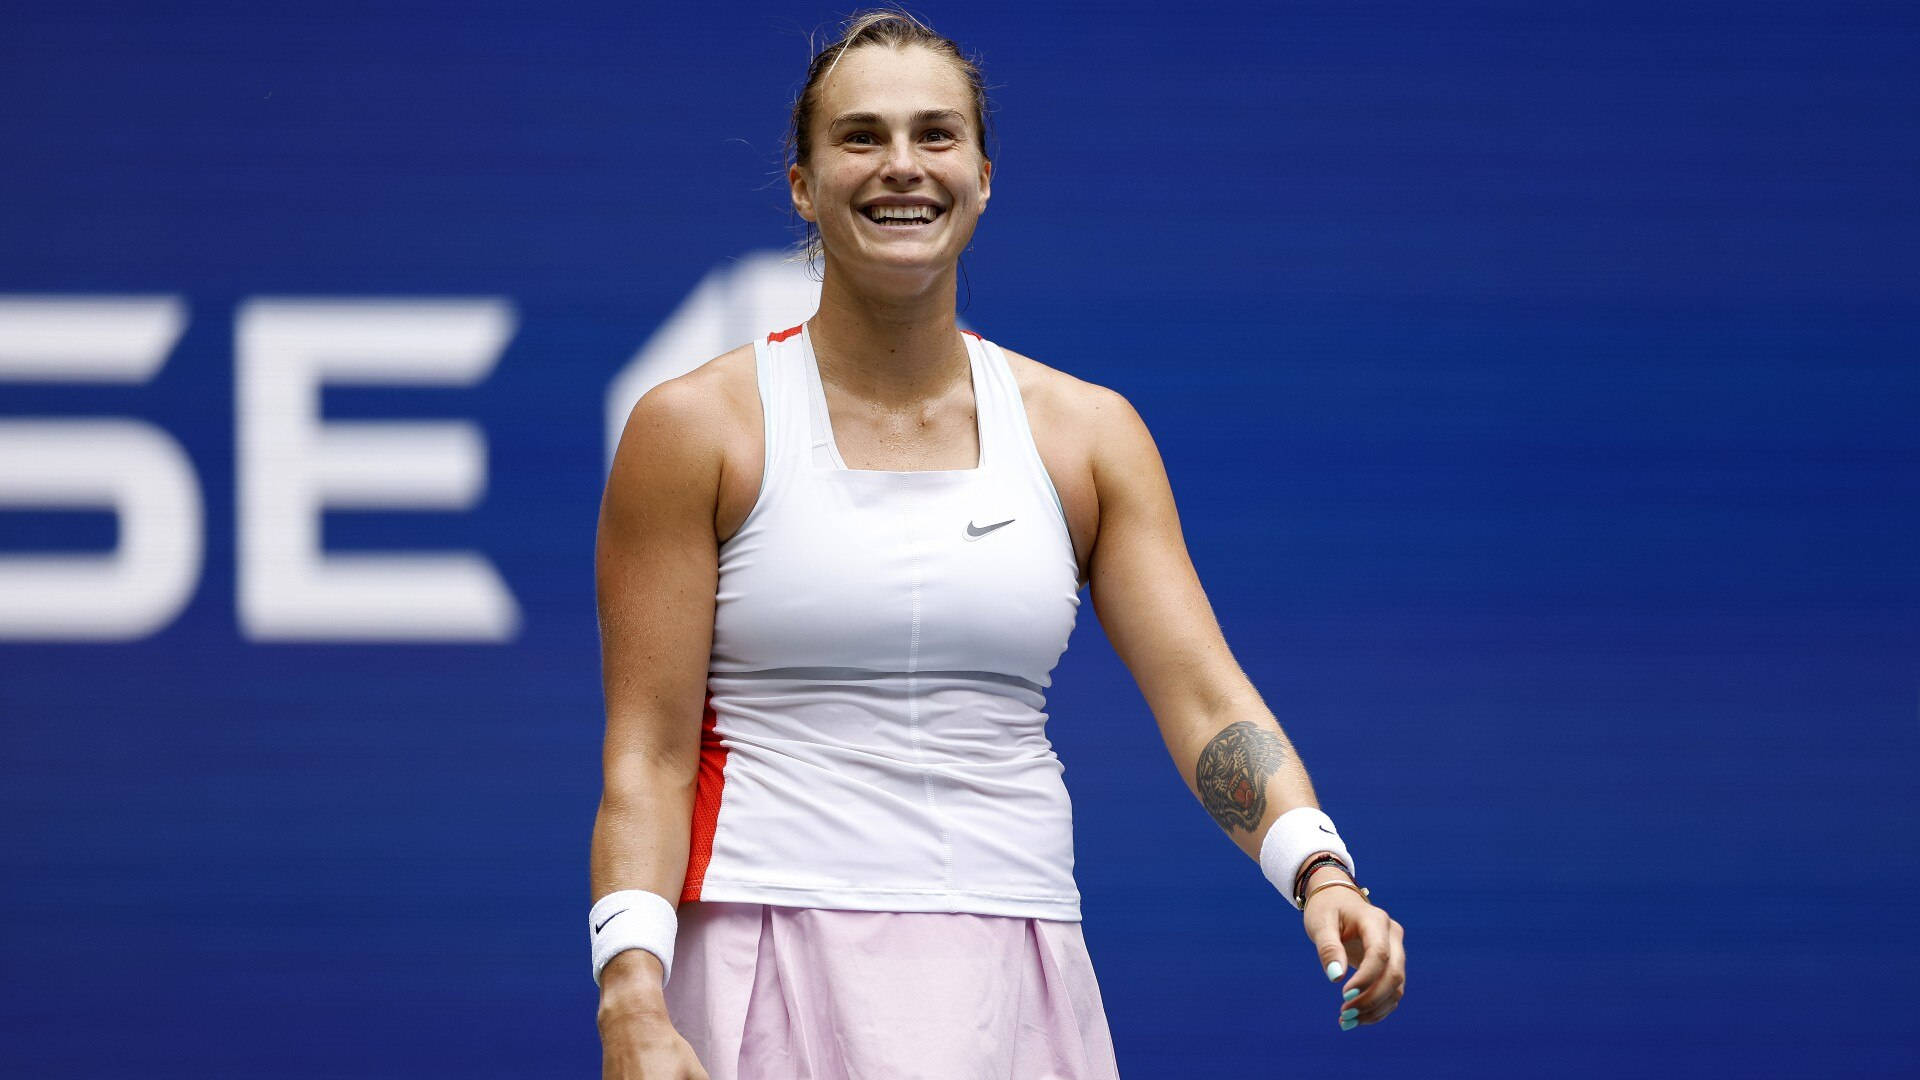 Aryna Sabalenka - Professional Tennis Player with Winning Smile Wallpaper